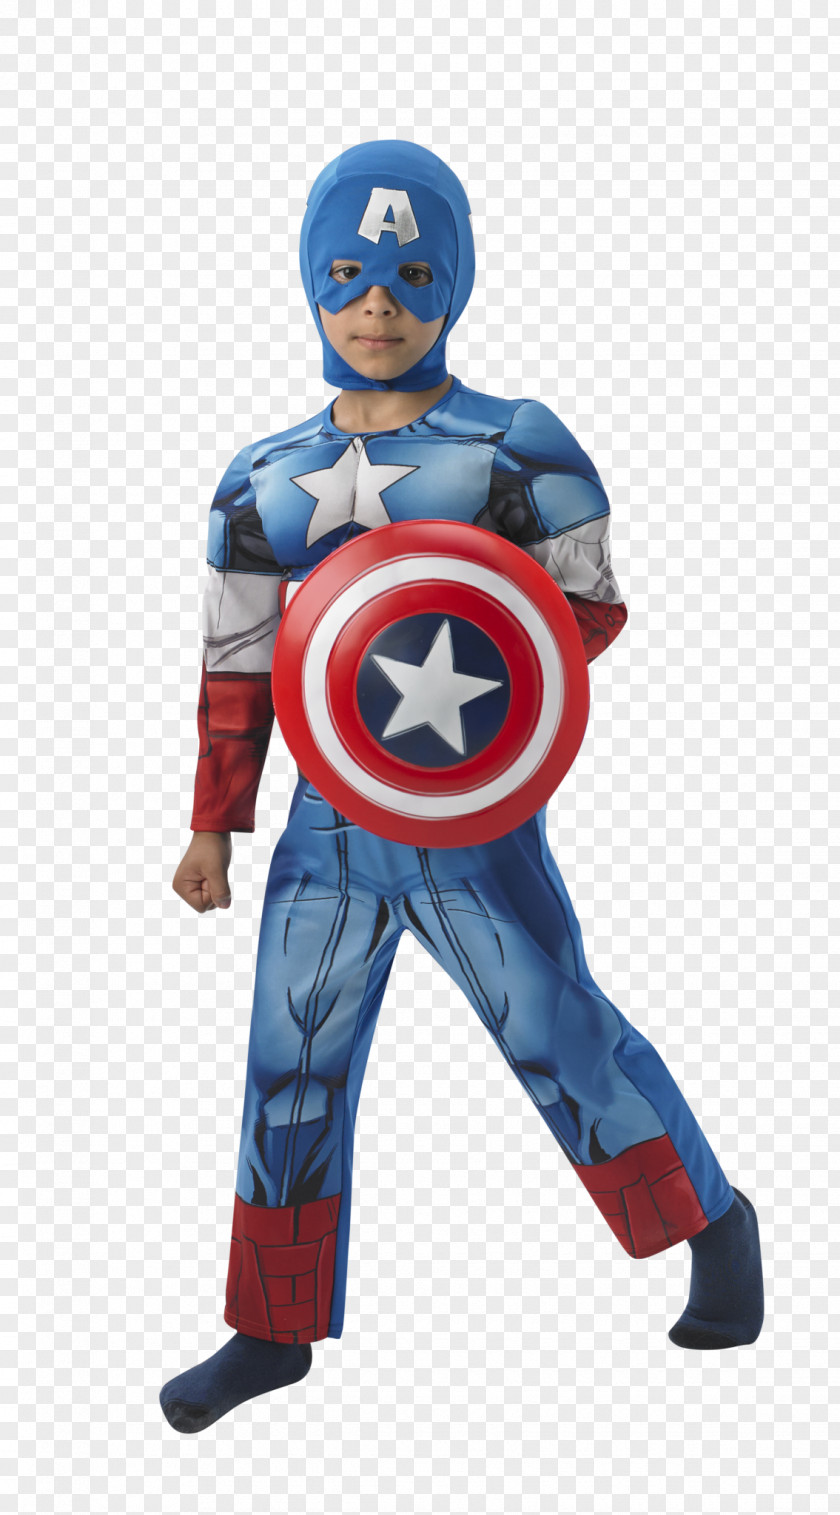 Captain America Marvel Avengers Assemble Superhero Costume Party PNG